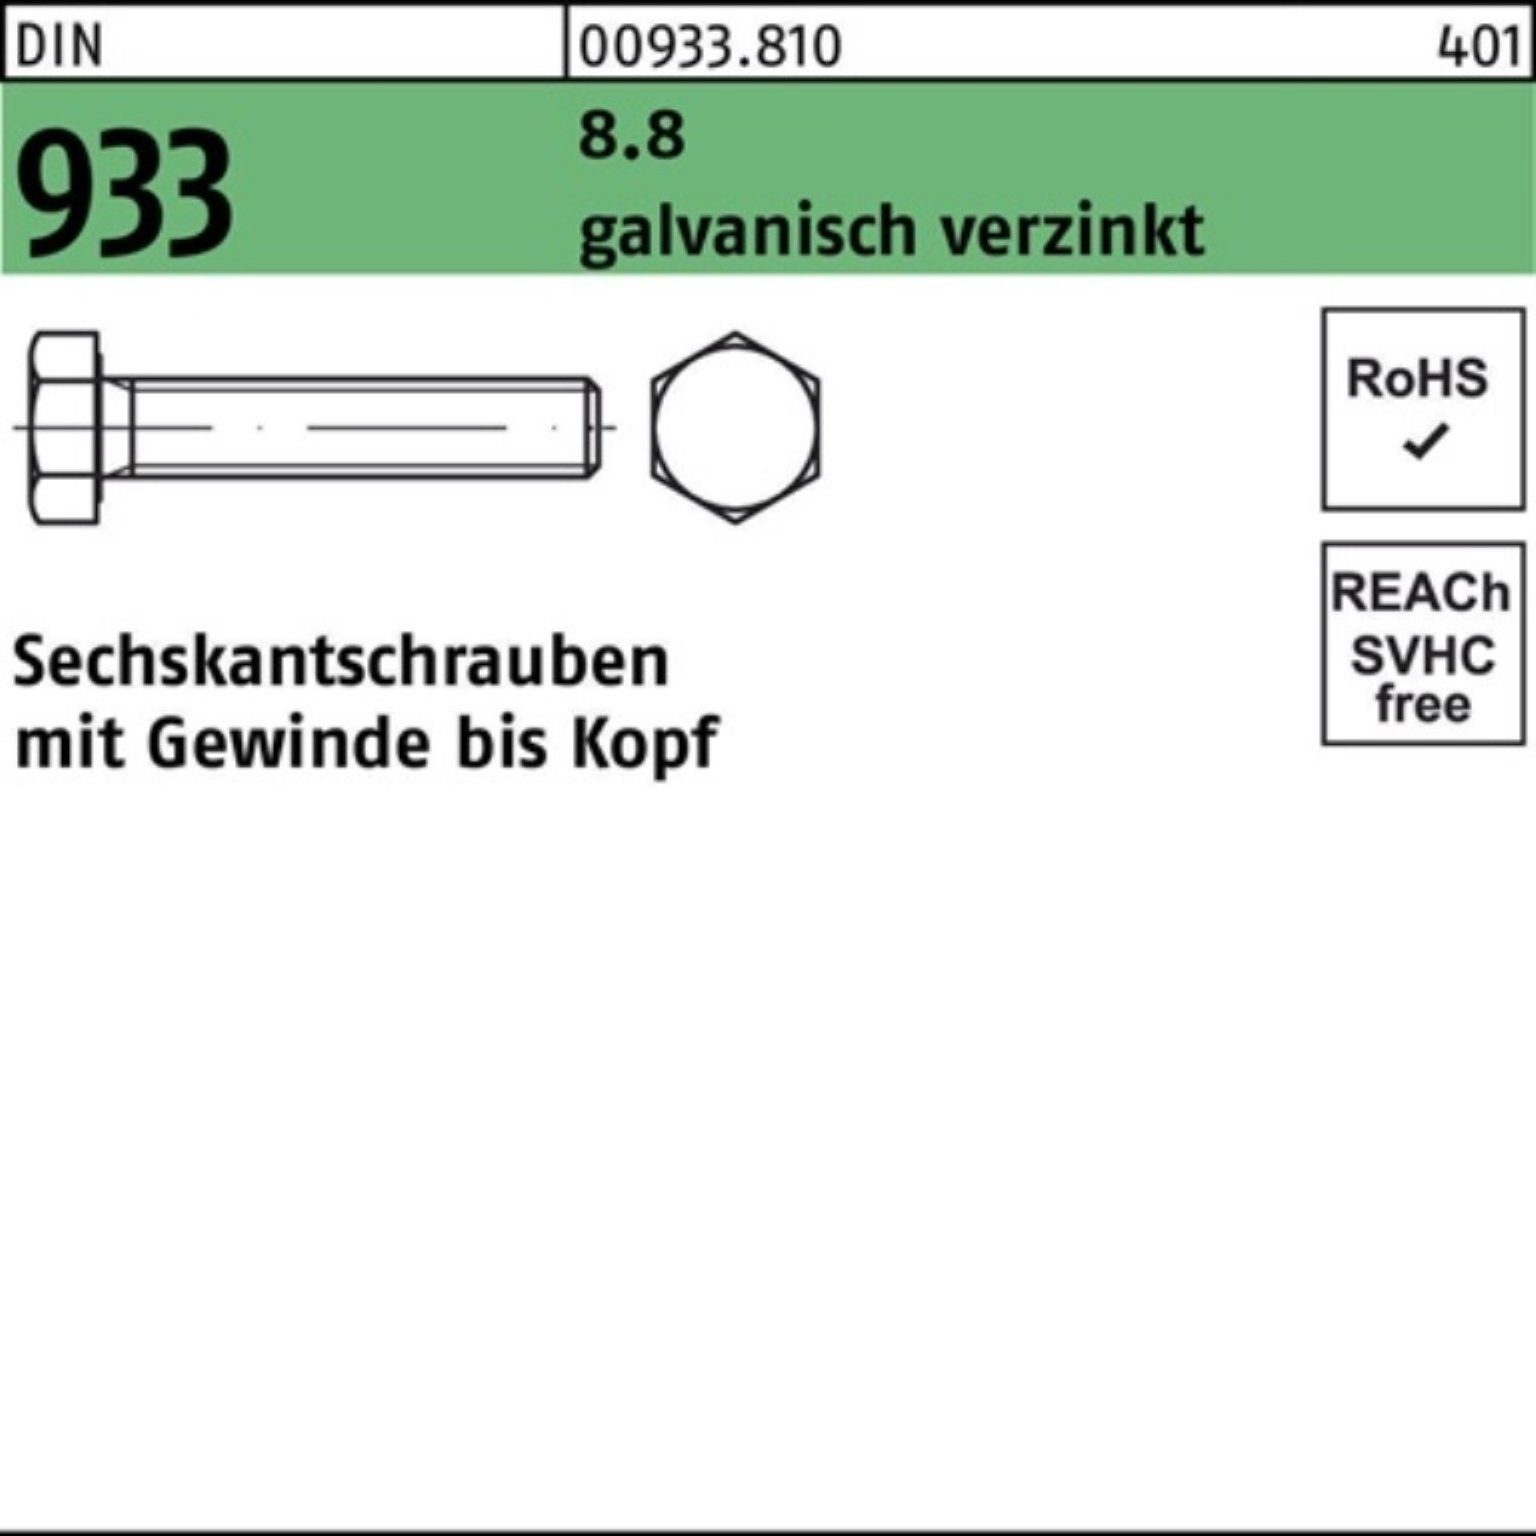 VG Stü Sechskantschraube Reyher galv.verz. 25 Sechskantschraube 100er 933 Pack 8.8 50 DIN M18x